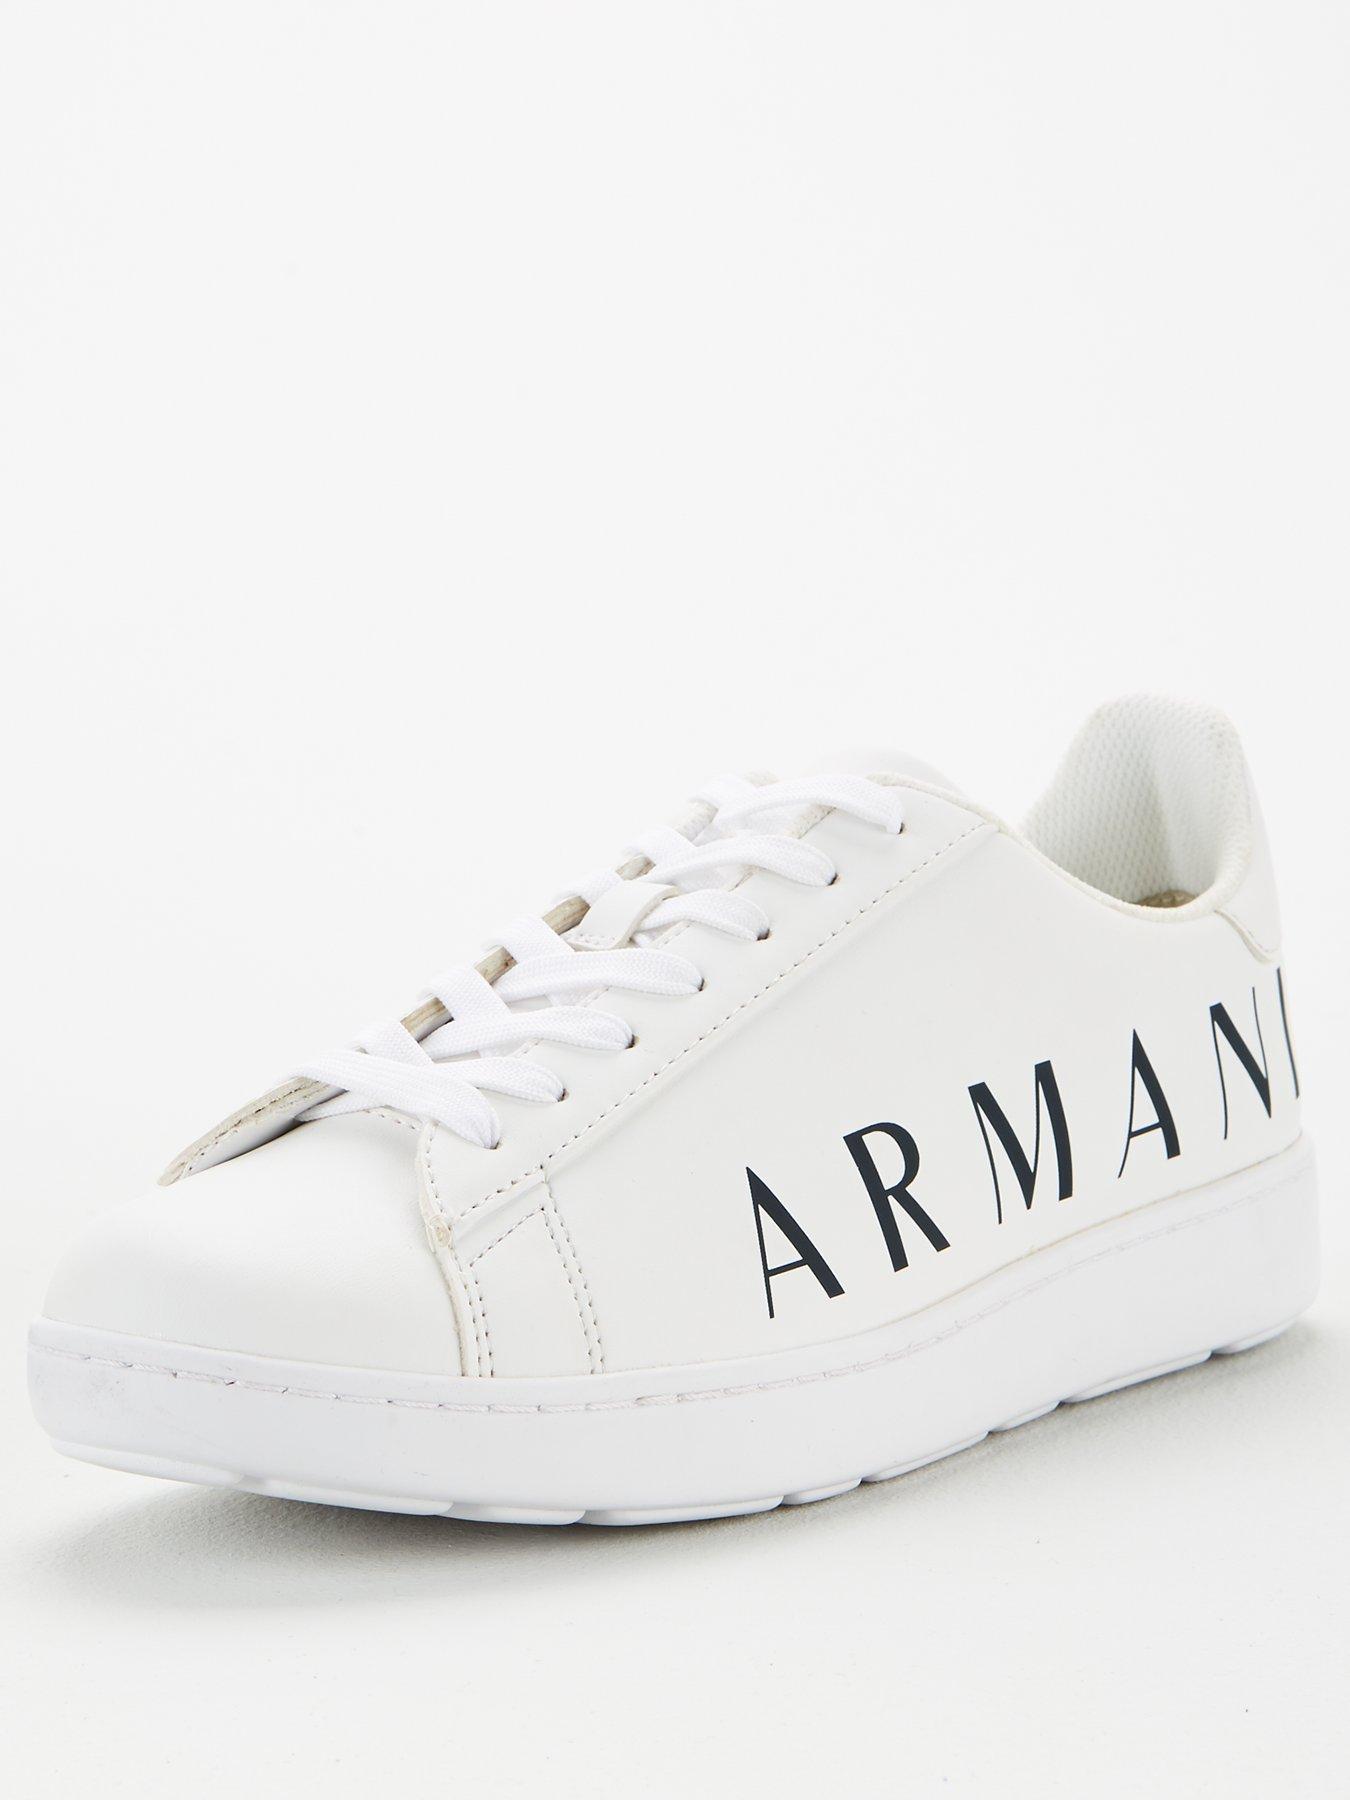 armani exchange shoes size chart